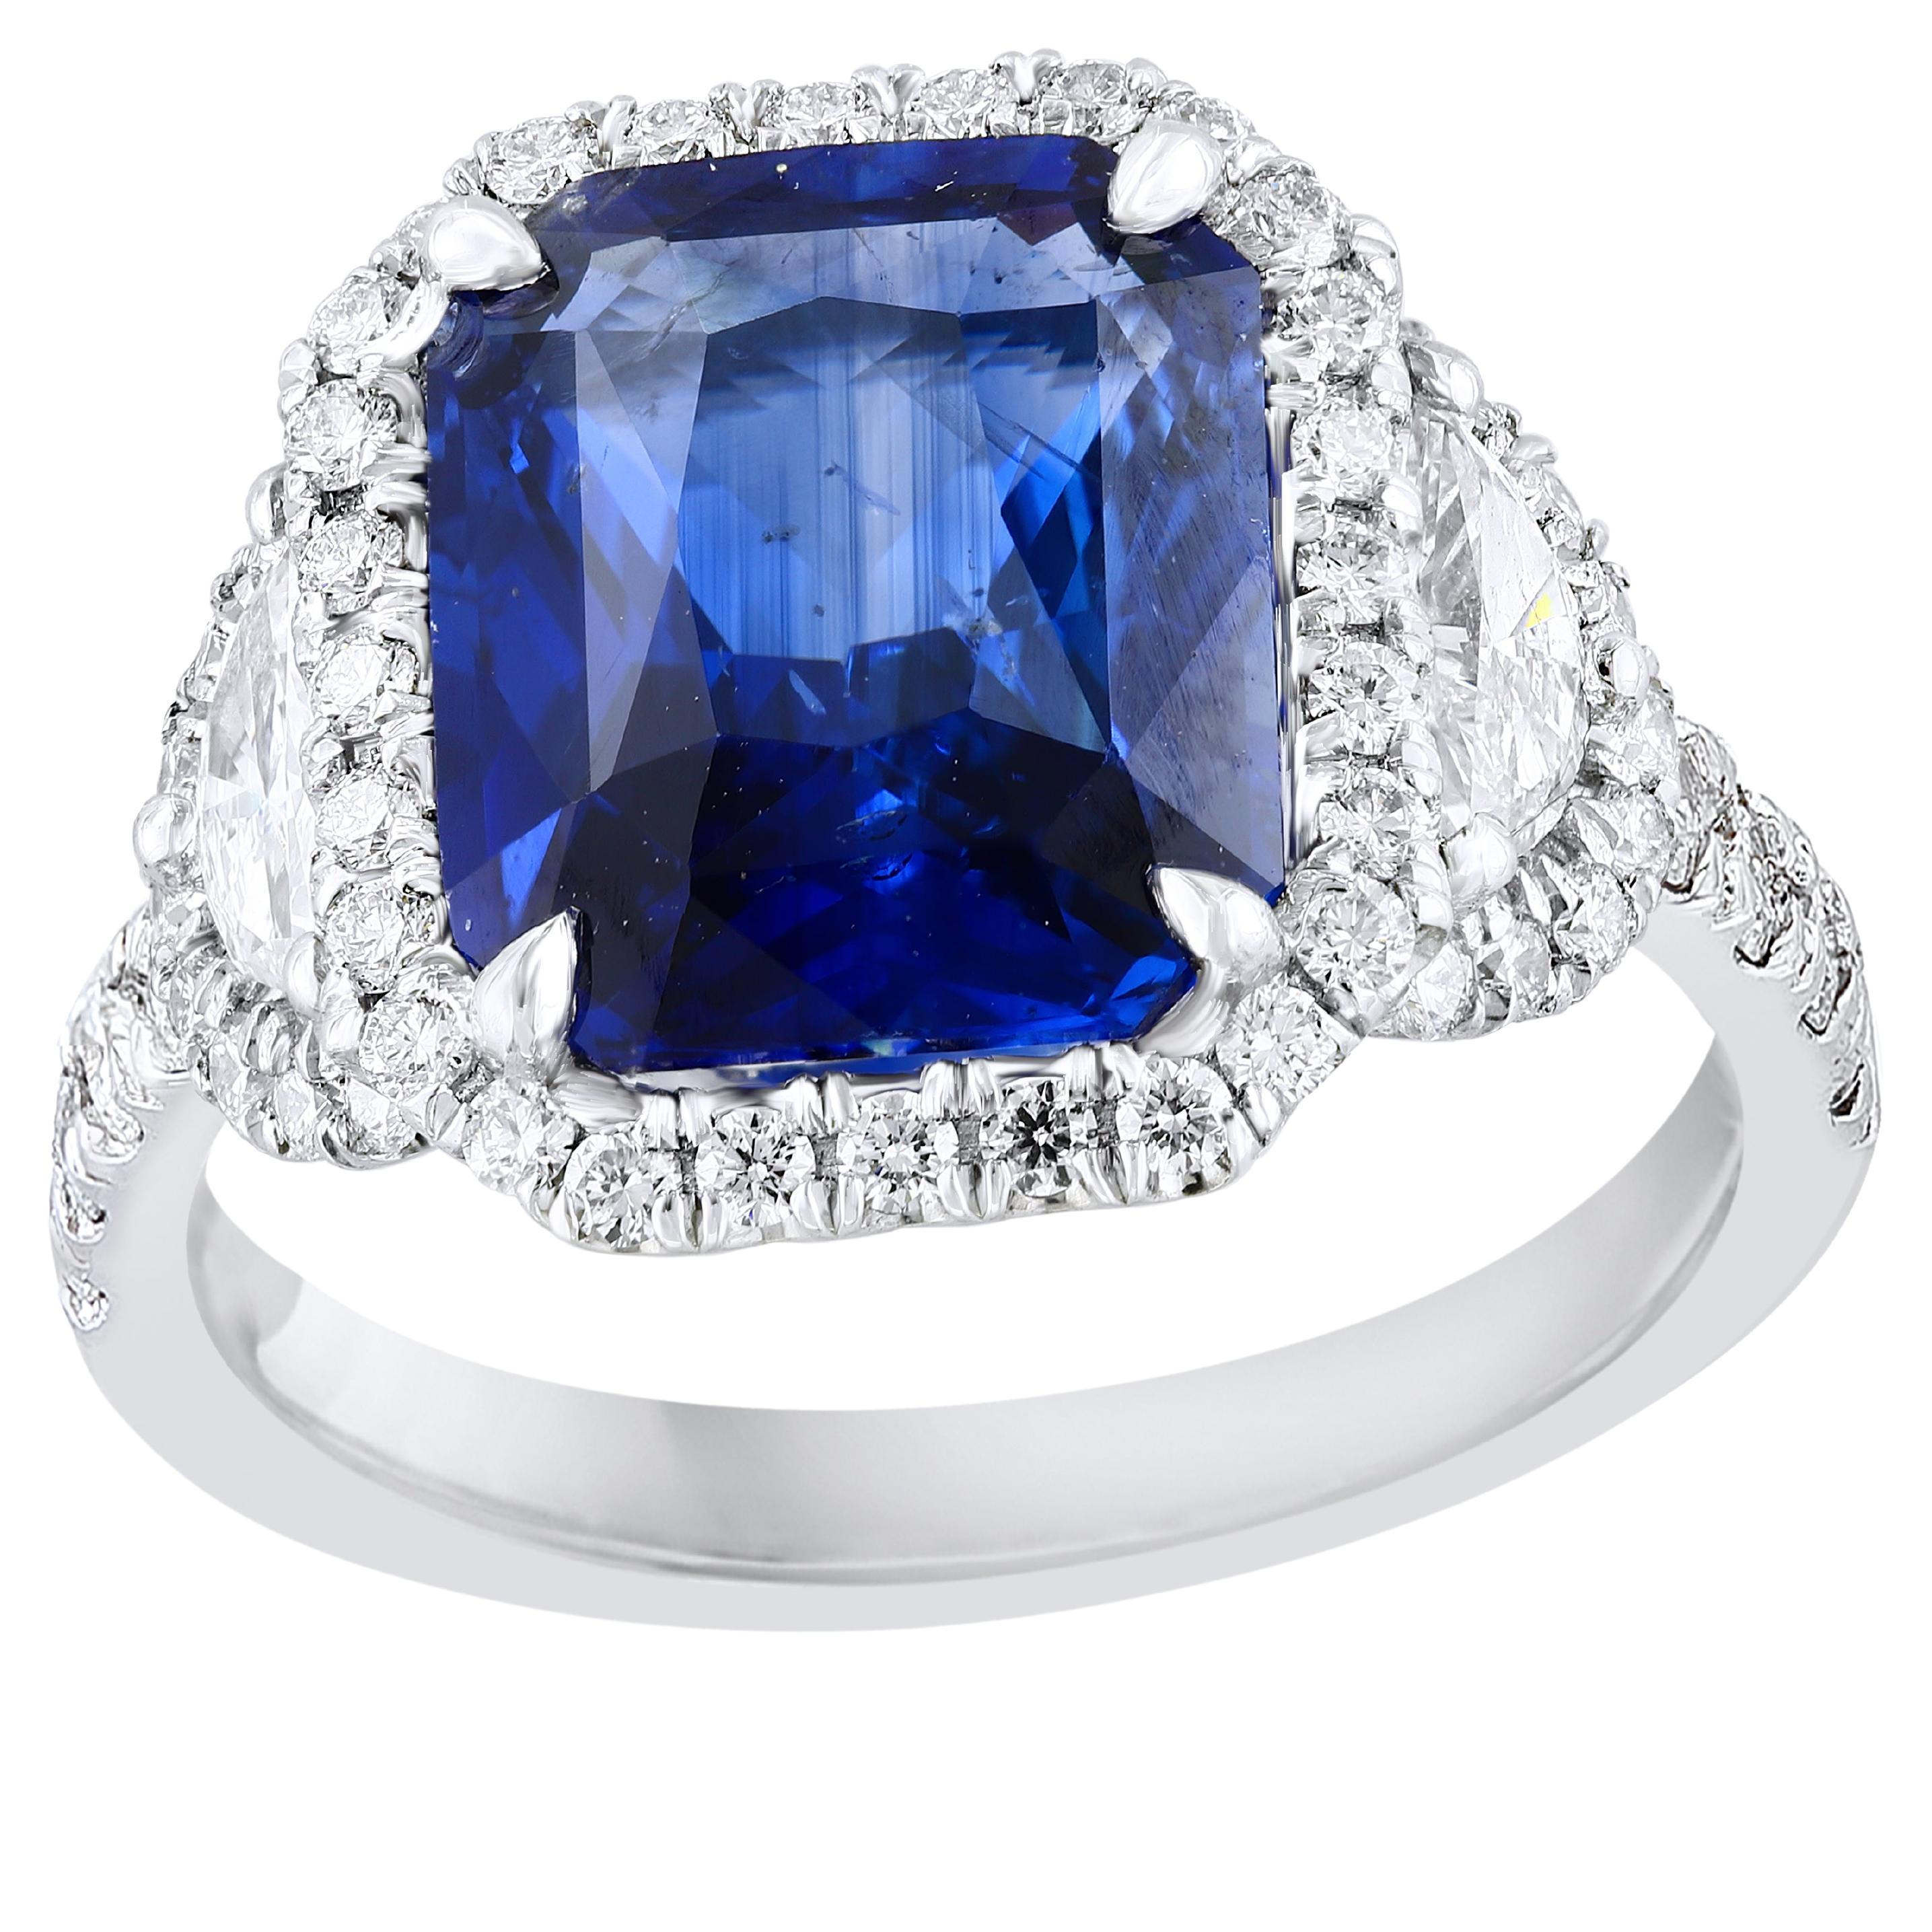 GIA Certified 4.41 Carat Emerald Cut Sapphire Diamond 3 Stone Ring in Platinum For Sale